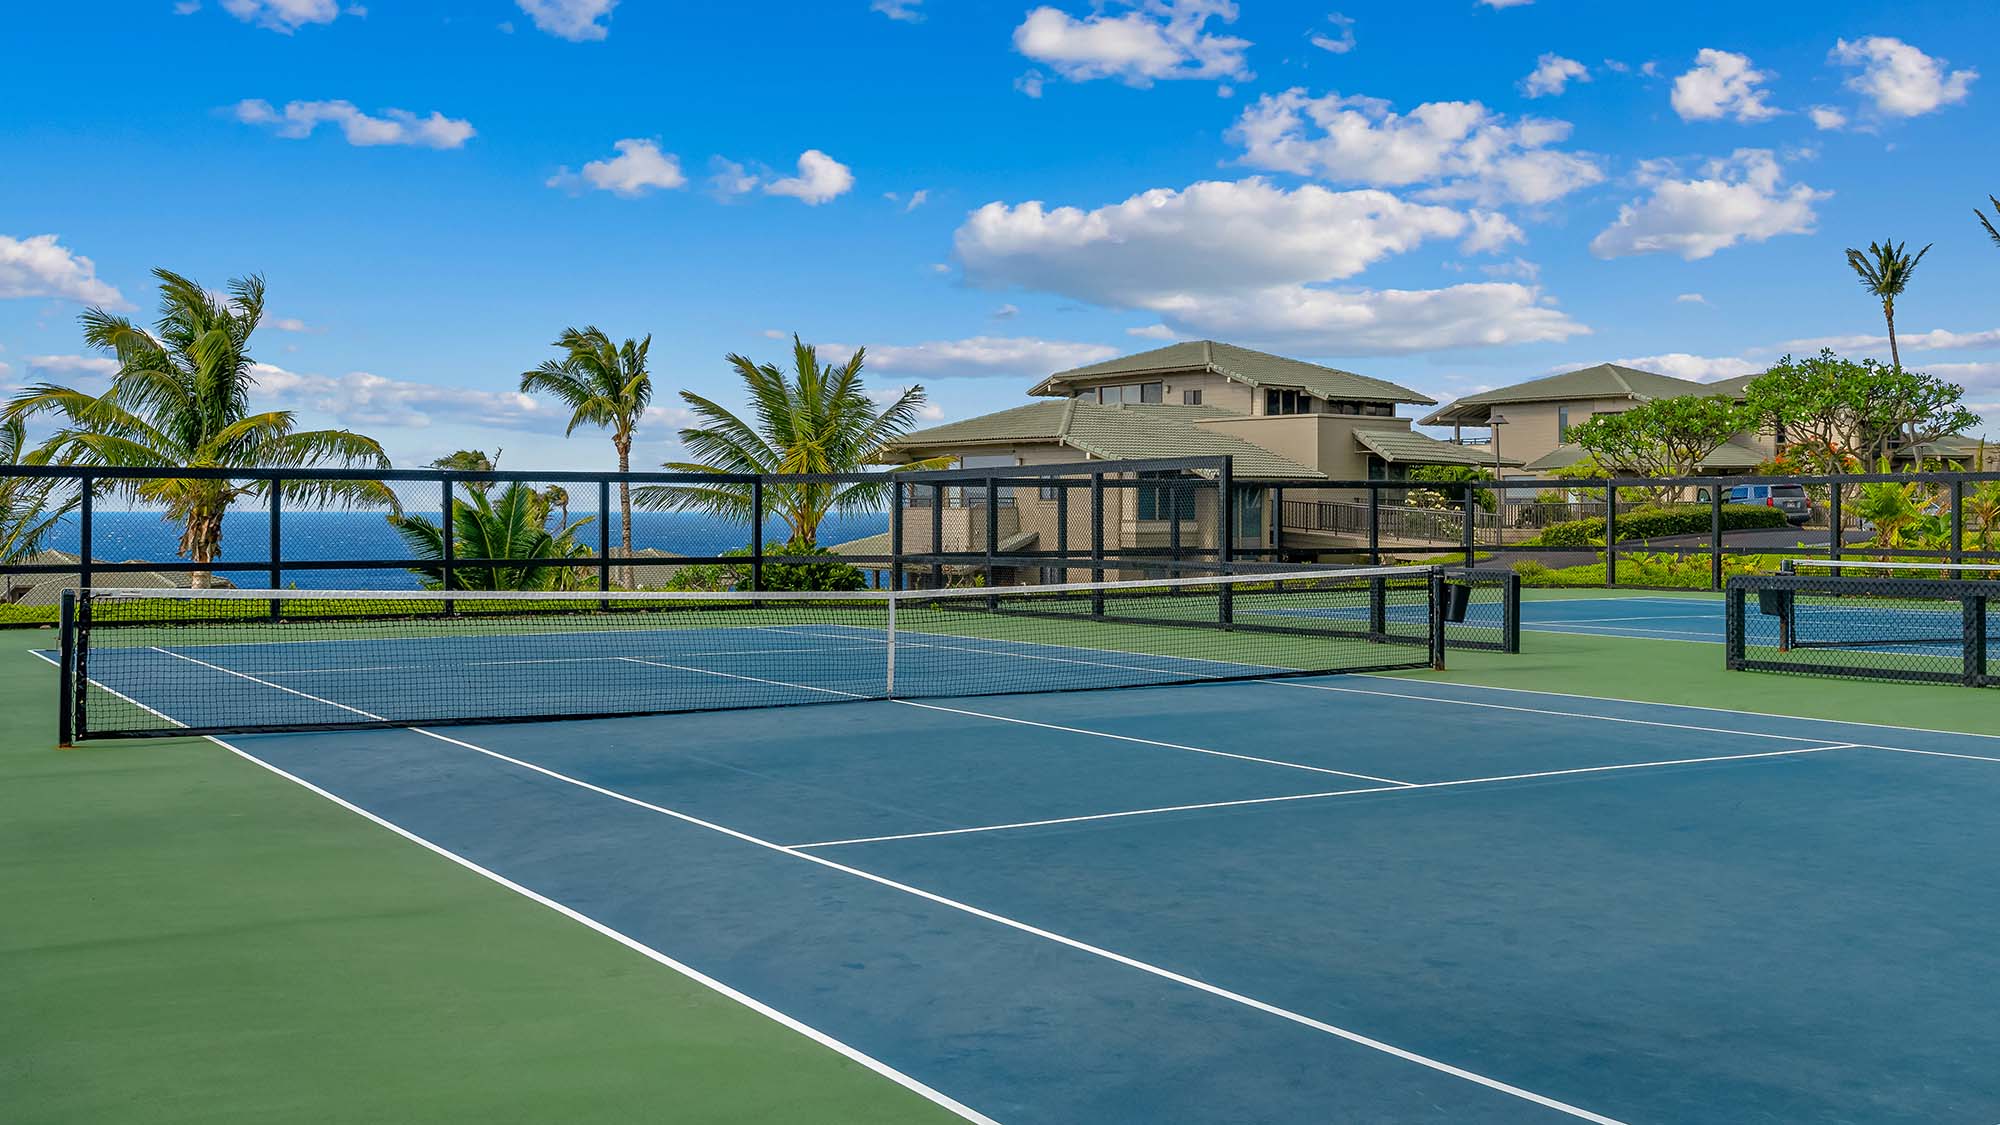 Kapalua Bay Villas - Resort Tennis Courts - Parrish Maui